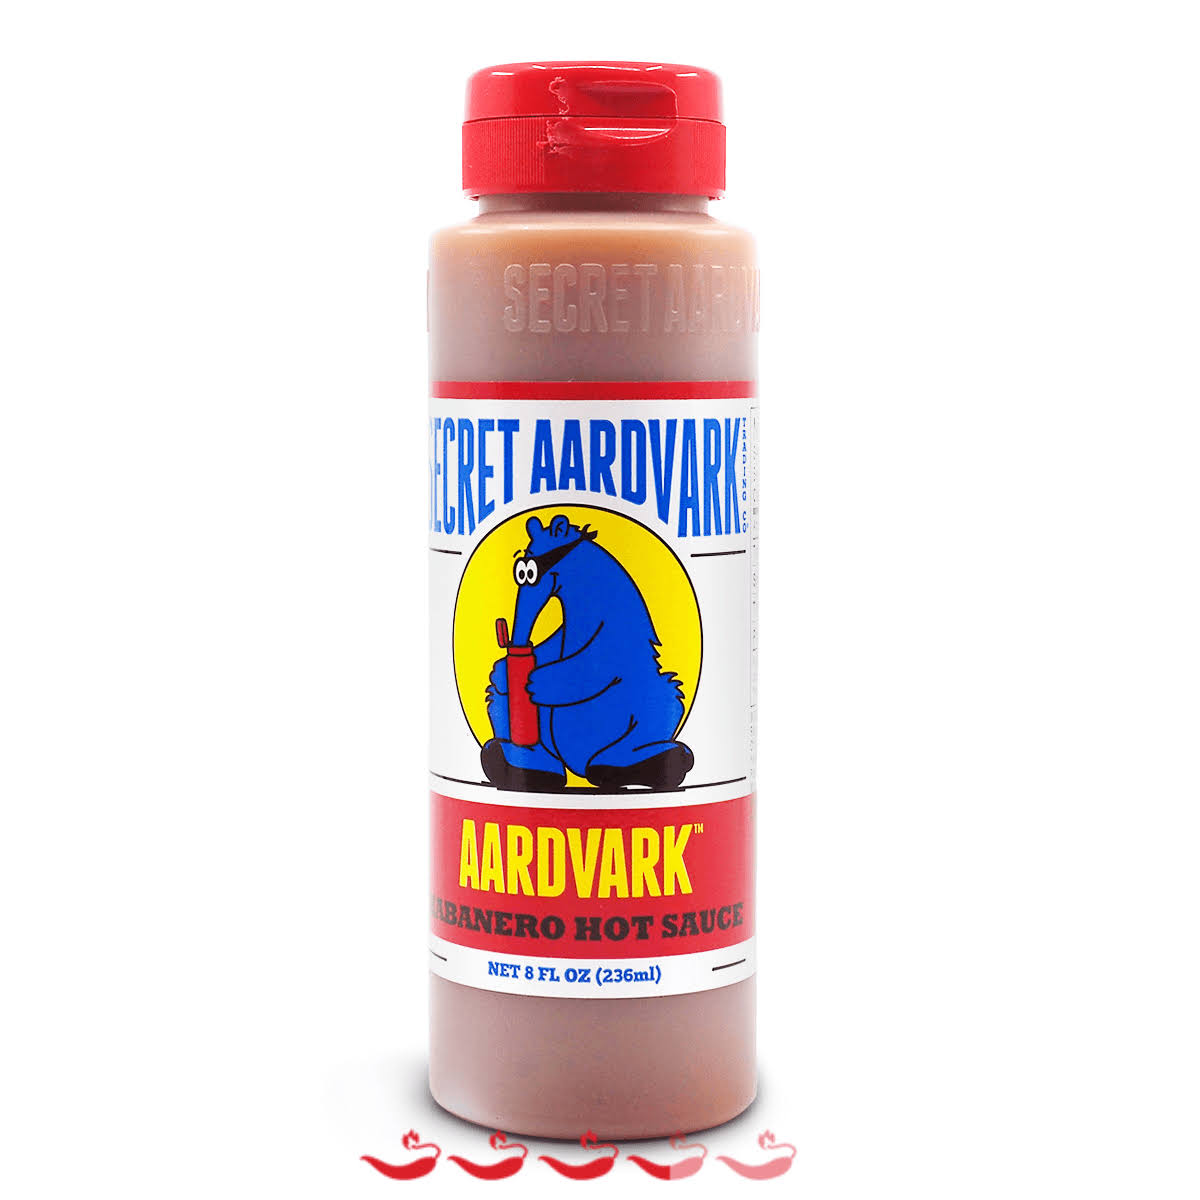 Secret Aardvark Habanero Hot Sauce - 10.5oz